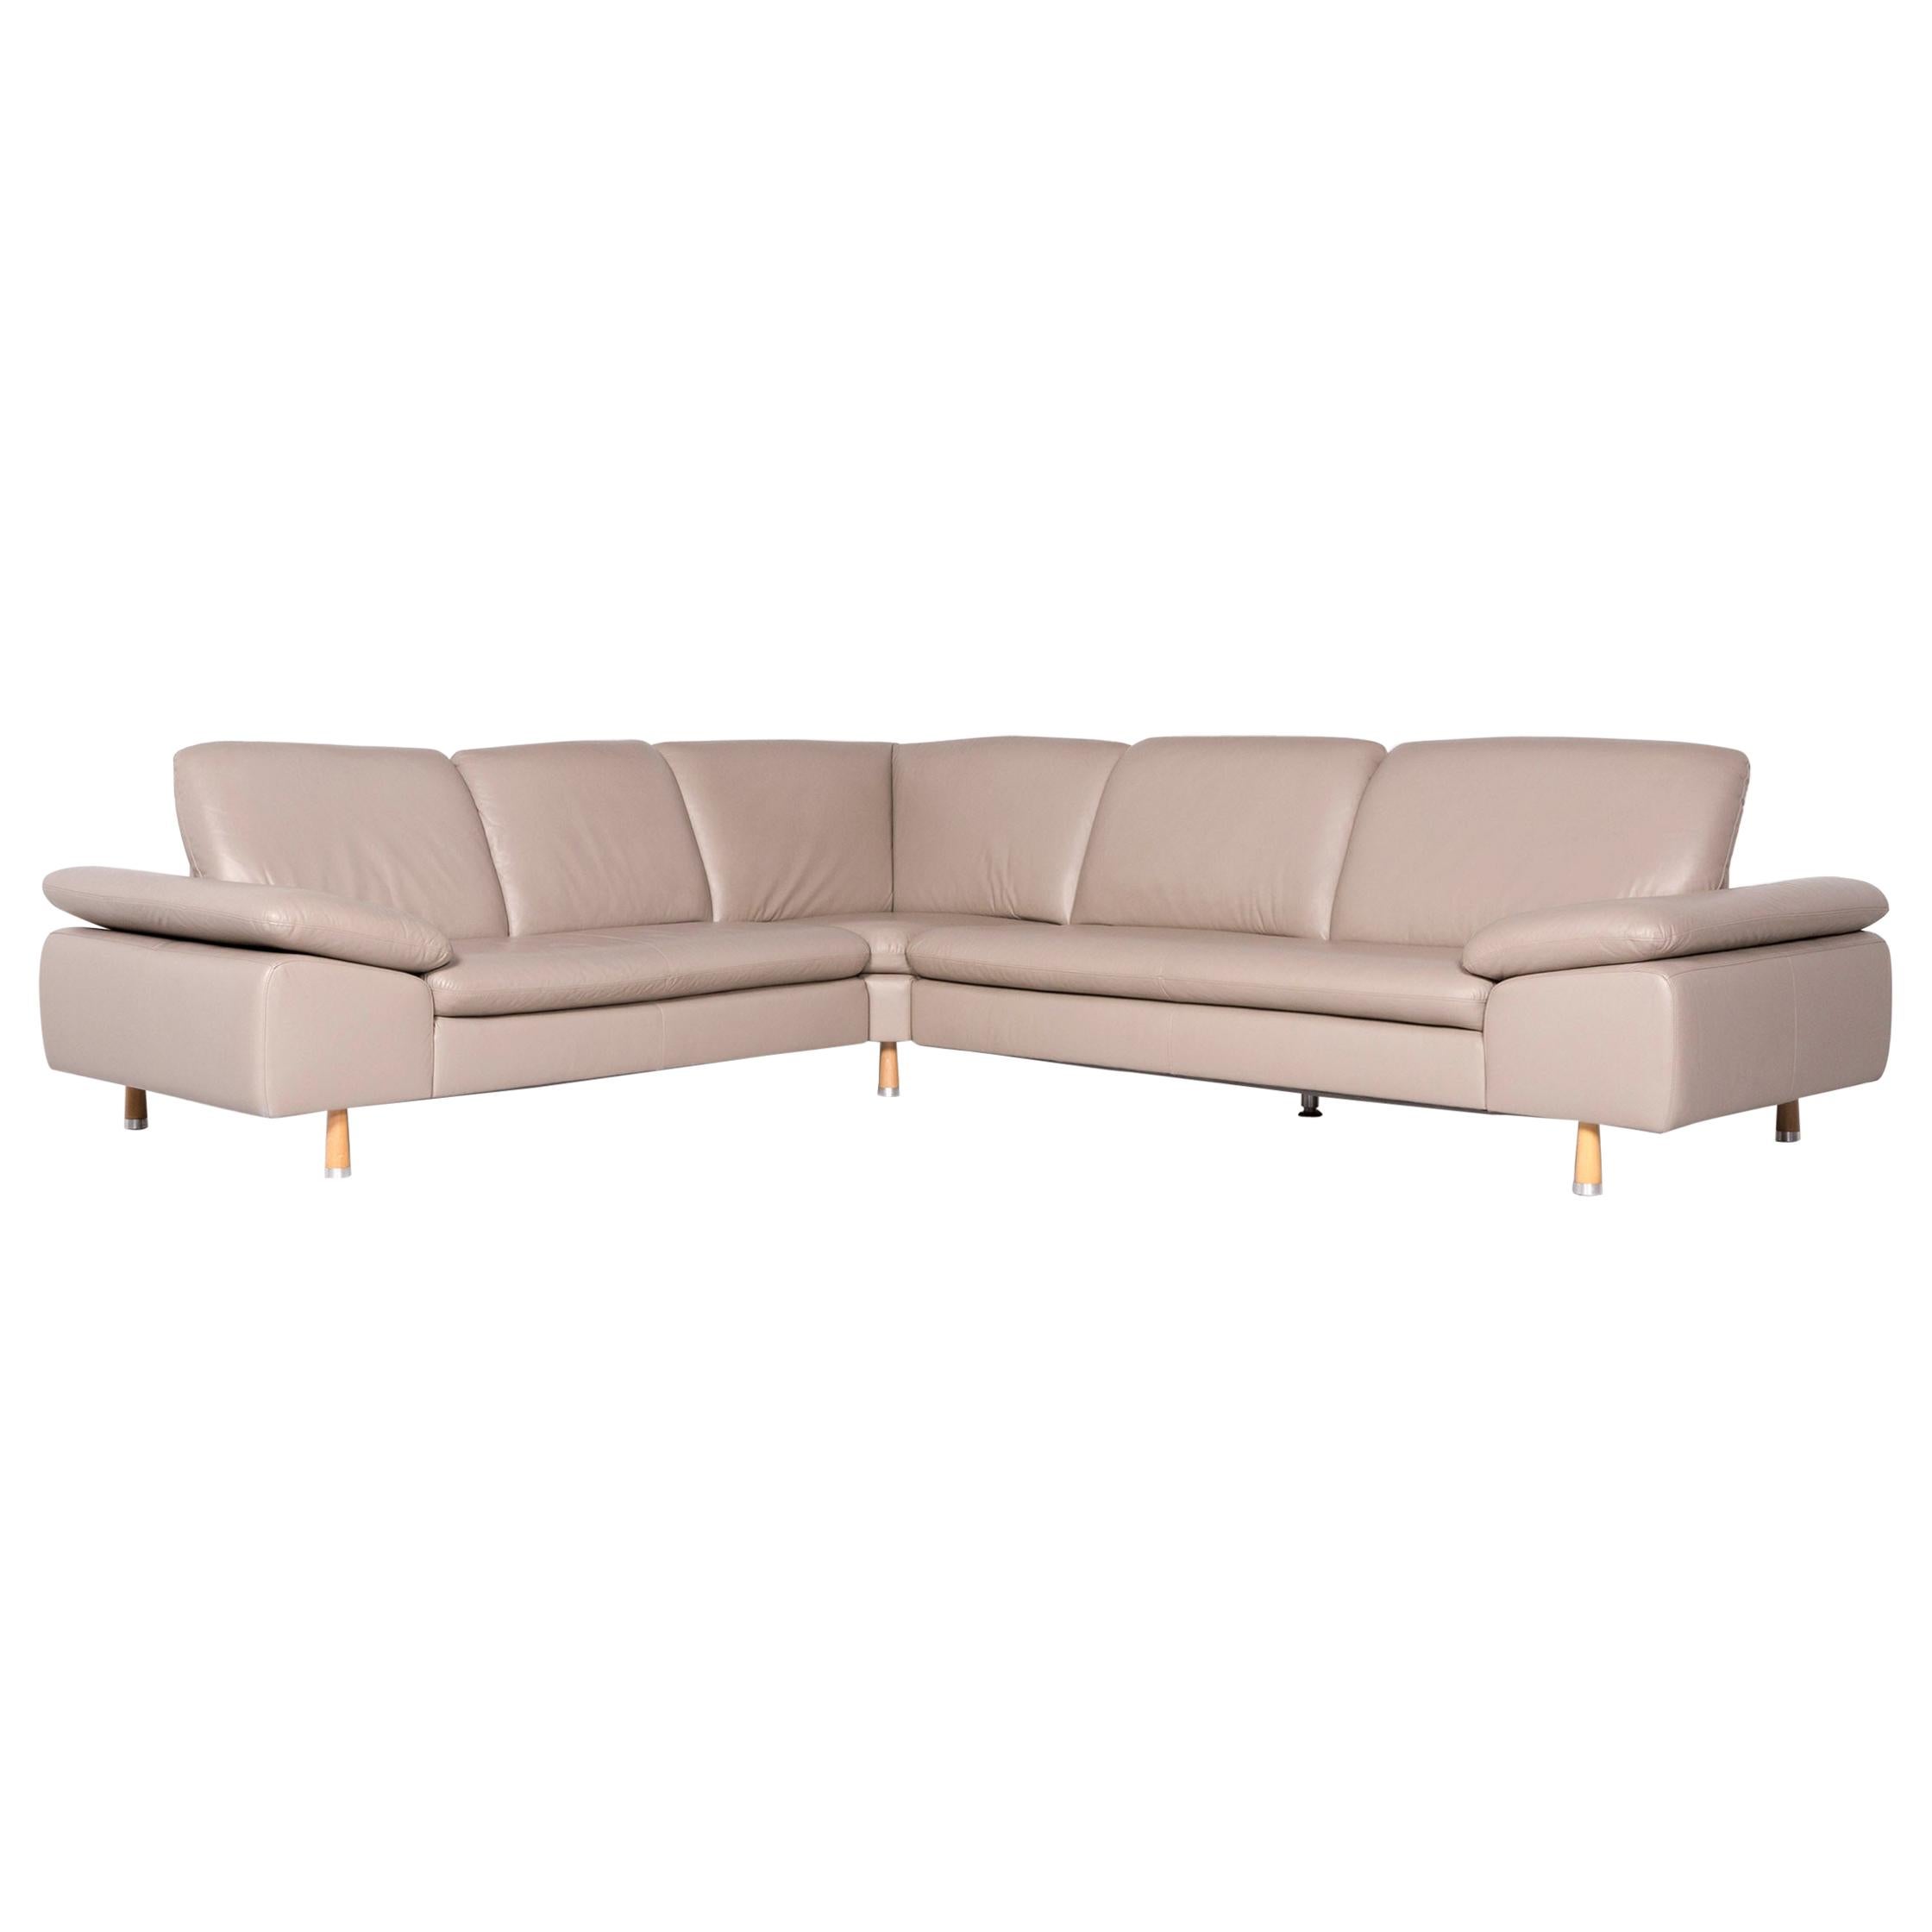 Willi Schillig designer leather sofa Beige corner sofa couch